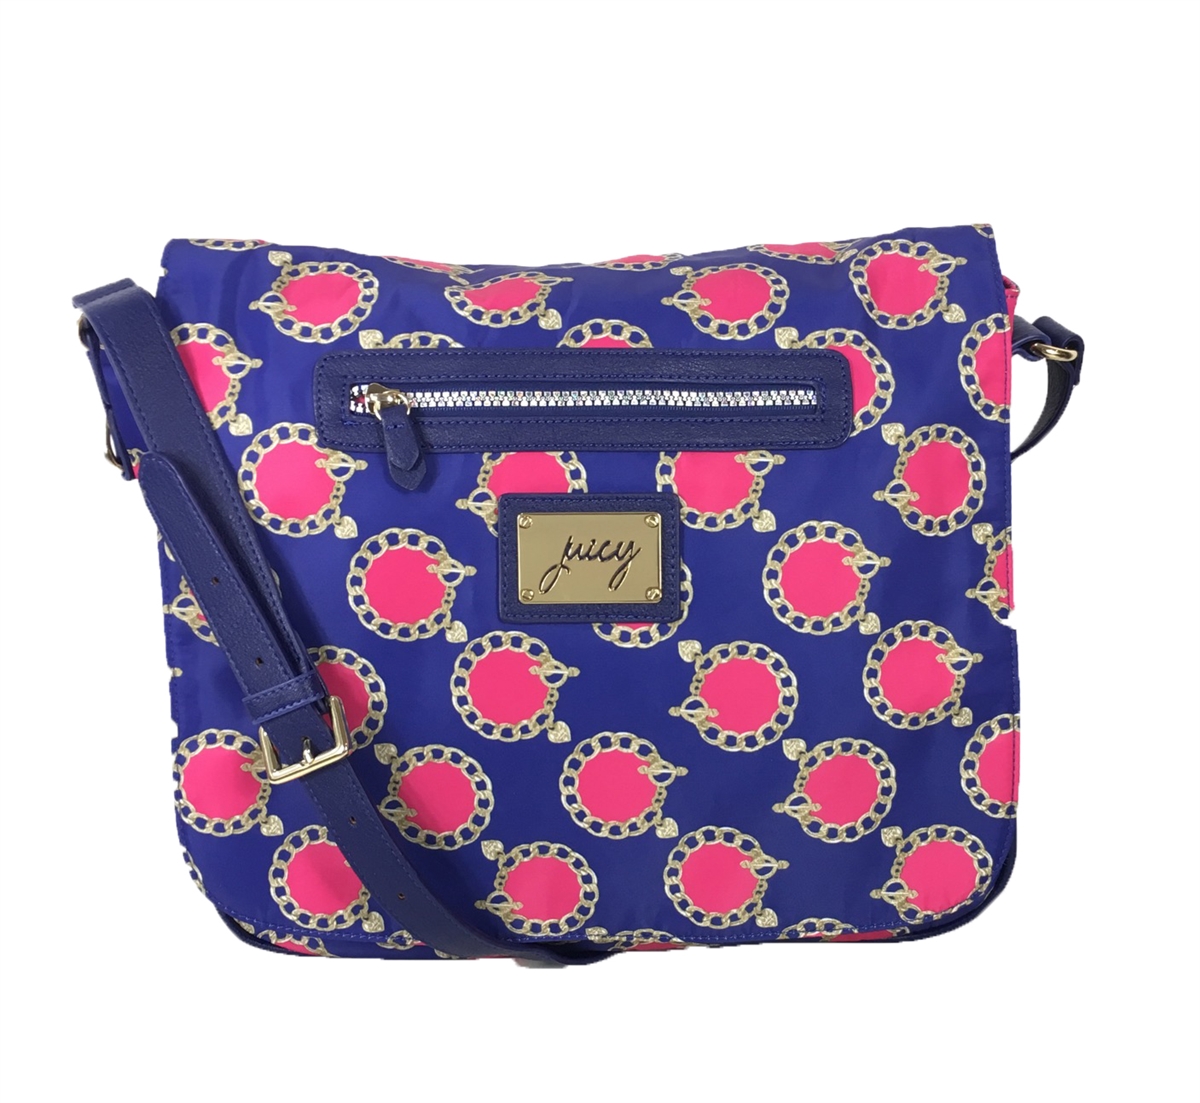 NEW Juicy Couture Terry Crest Laptop Case Bag Blue | Bags, Blue bags, Juicy  couture bags